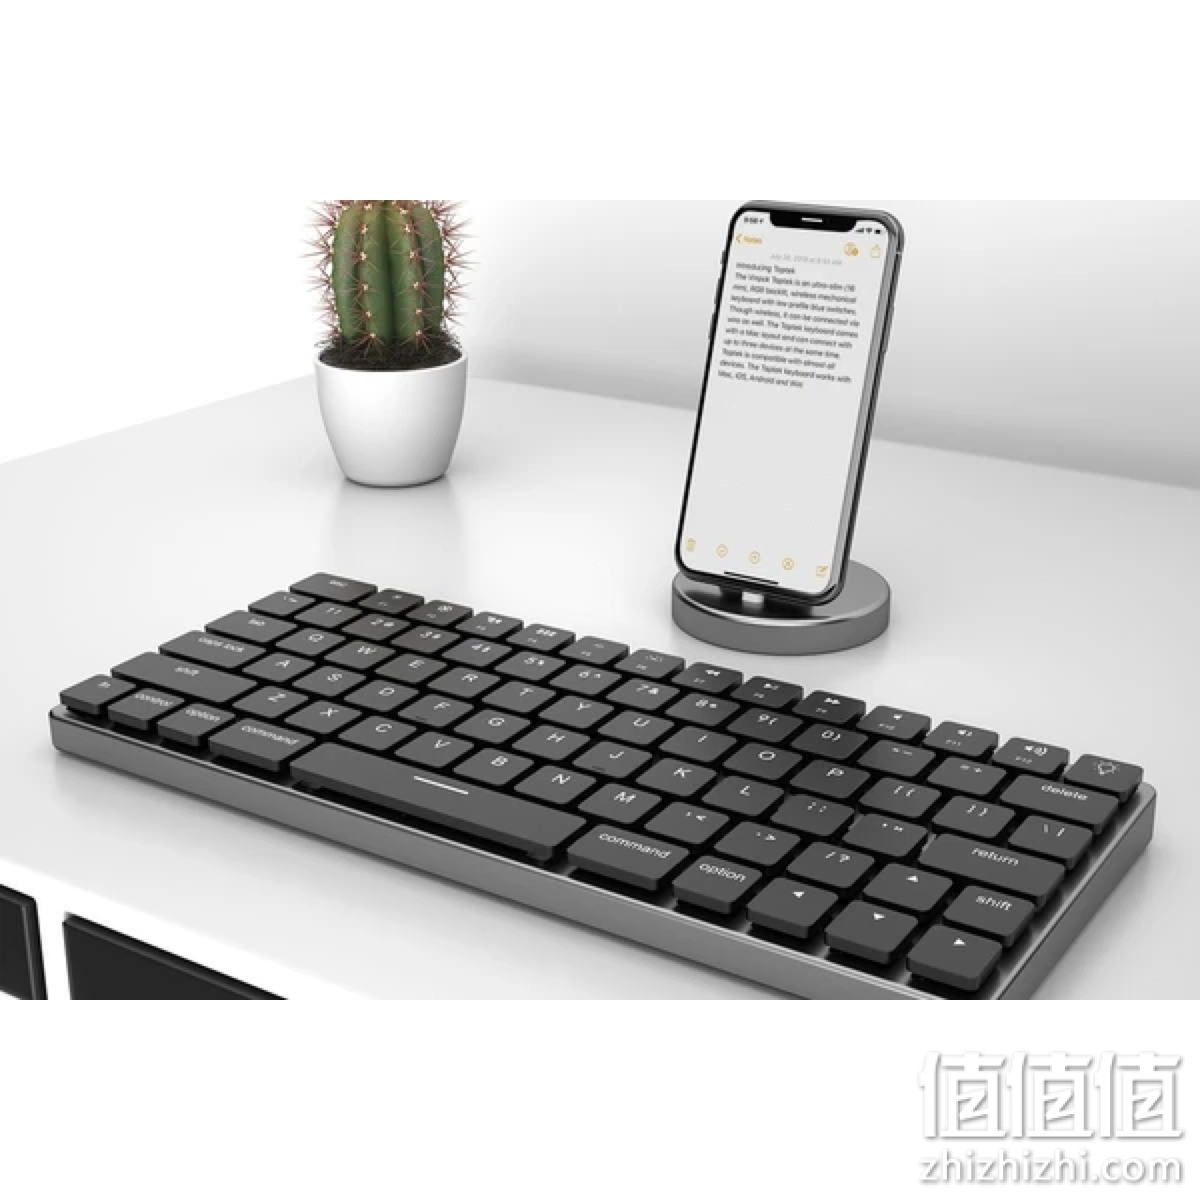 Matias FK318S 铝制 USB 键盘 适用于 Apple Mac OS | QWERTY | 美国 | 带响应扁平键和附加数字键盘 - 银色/白色